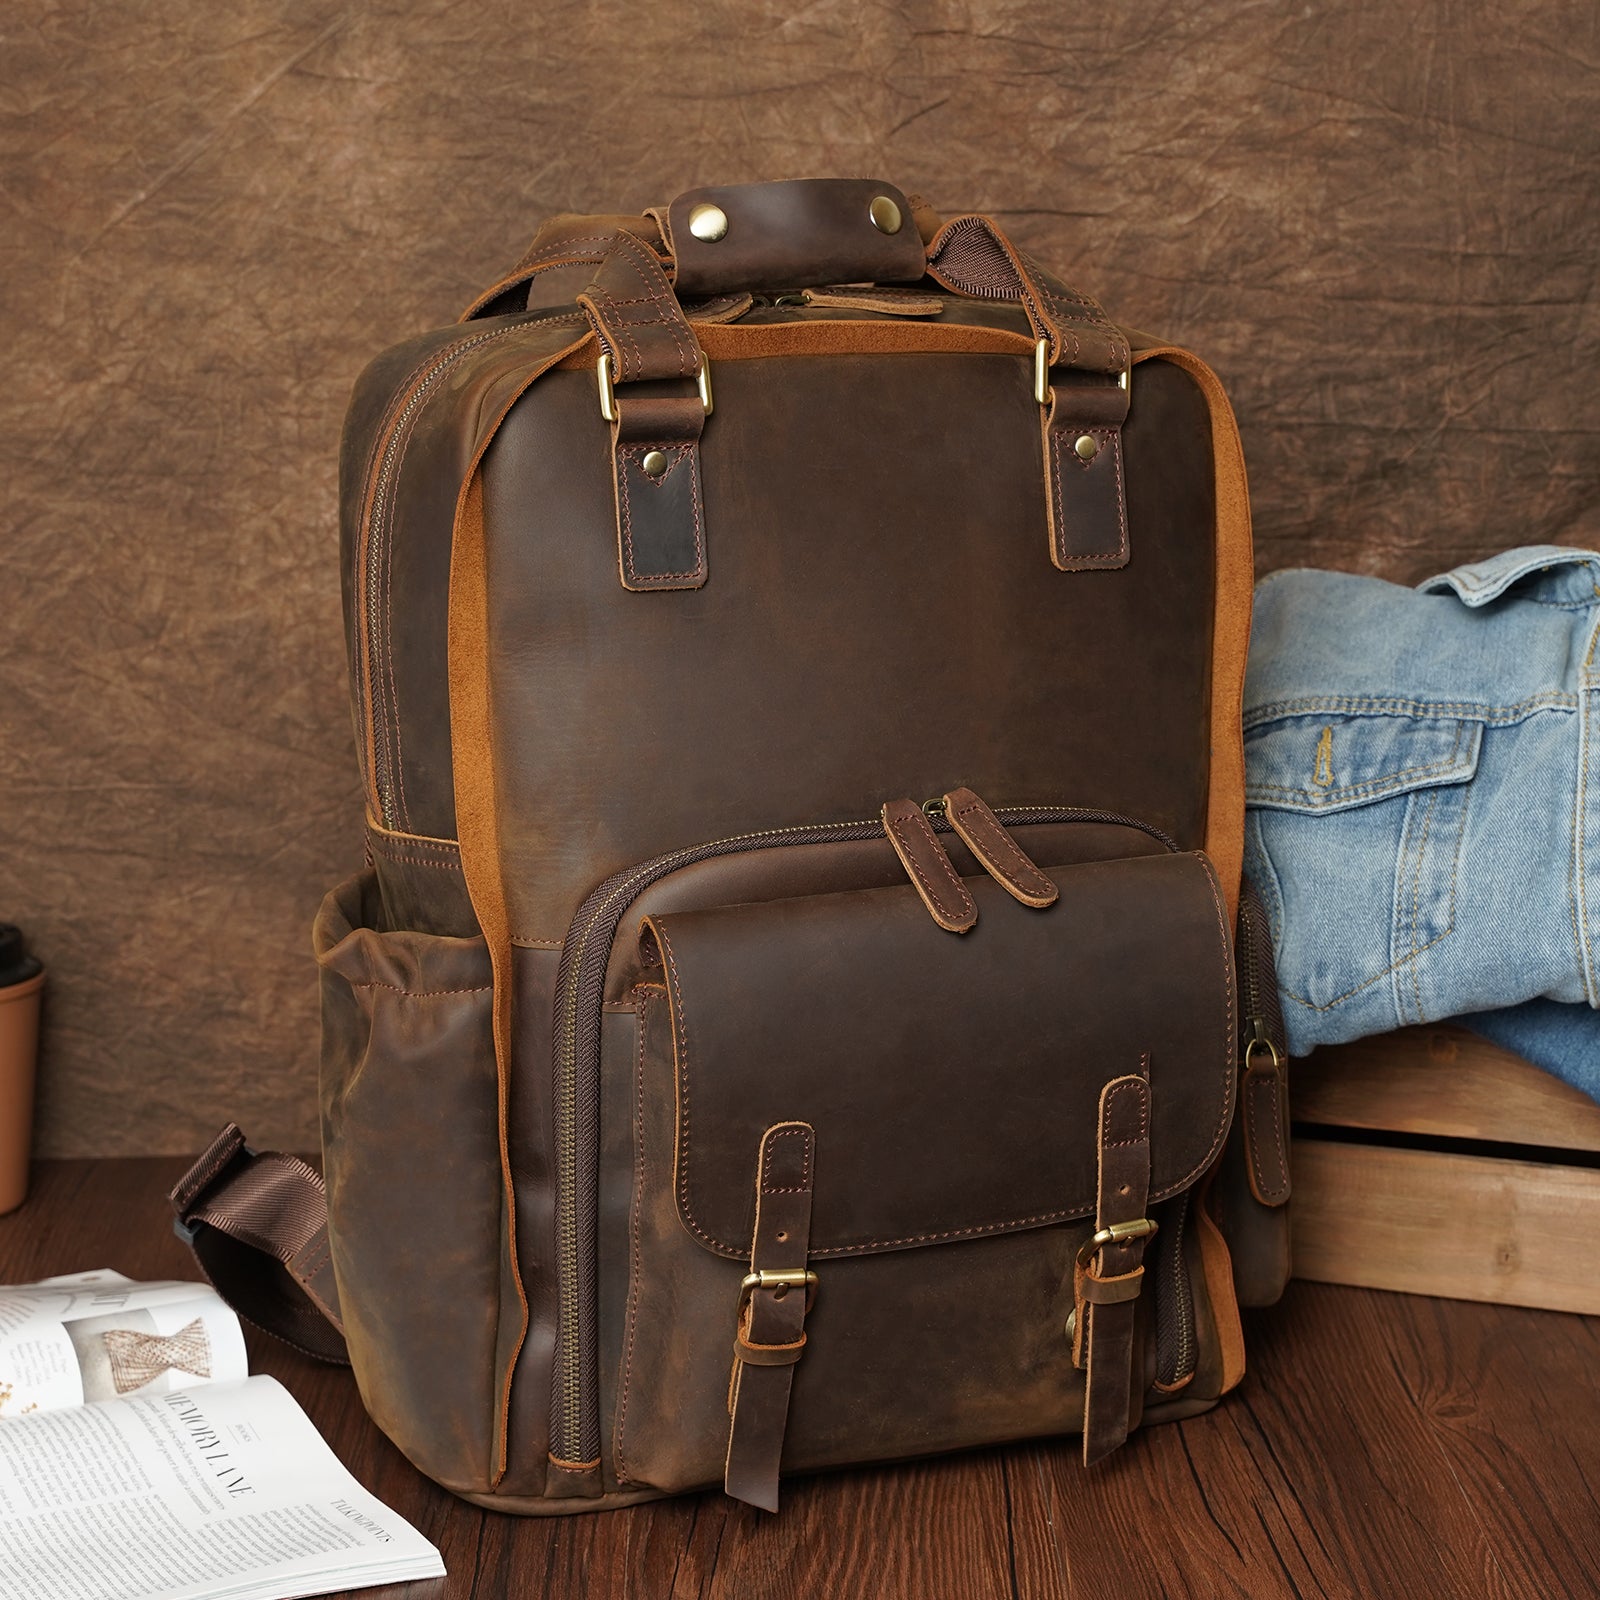 Polare Full Grain Italian Leather Backpack 15.6 Inch Laptop Bag Hiking Travel Rucksack (Scenario Shows)